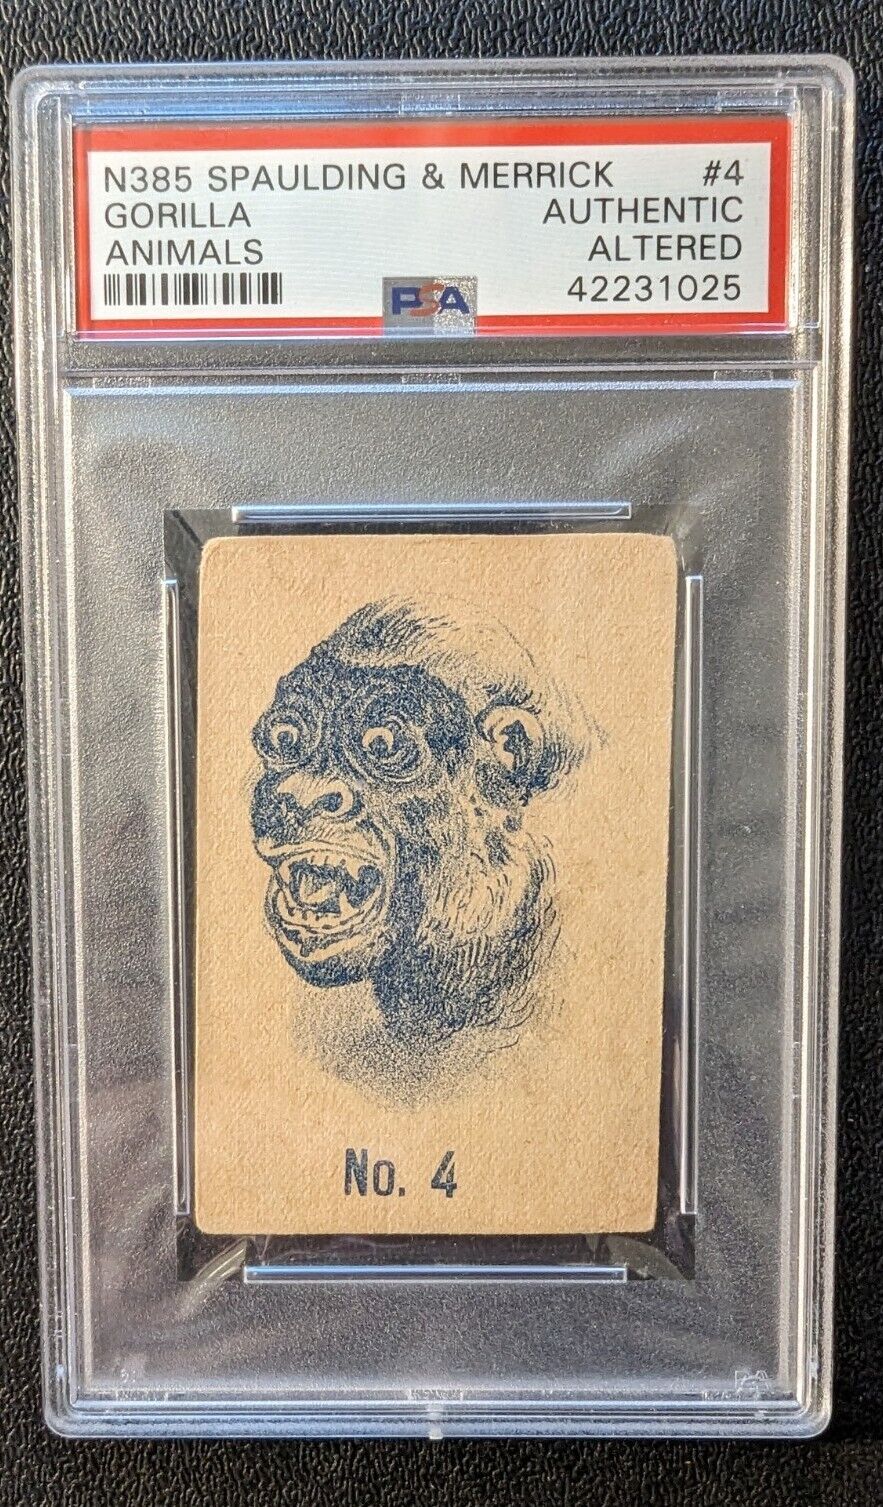 1889 1890 N385 Spaulding & Merrick Animals #4 Gorilla PSA Authentic Only Graded